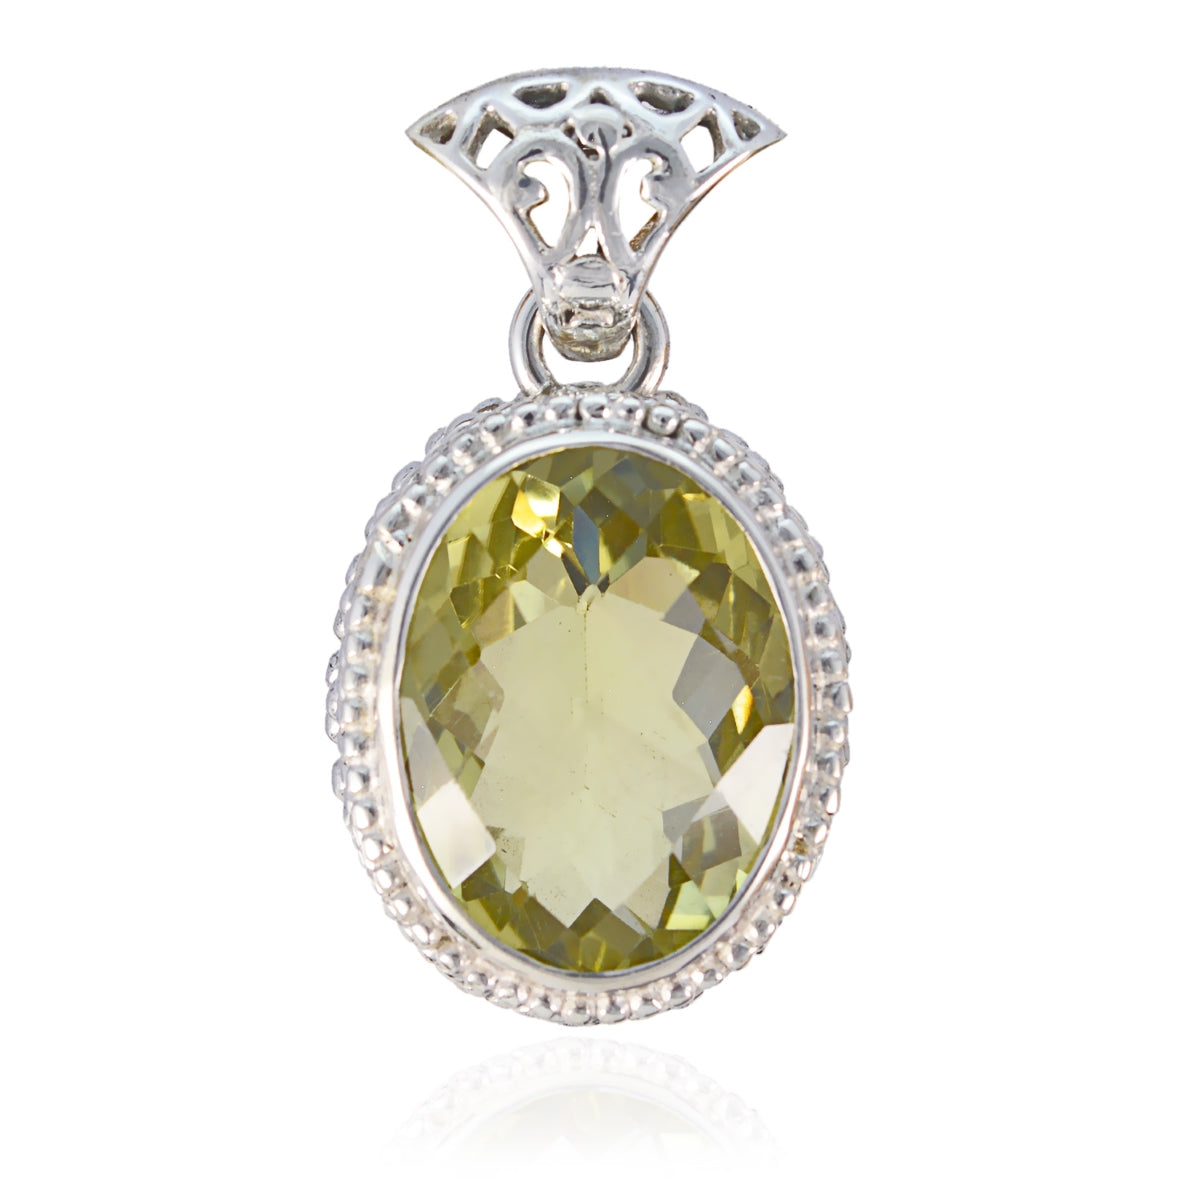 Riyo Good Gemstones Oval Faceted Yellow Lemon Quartz Sterling Silver Pendant christmas day gift